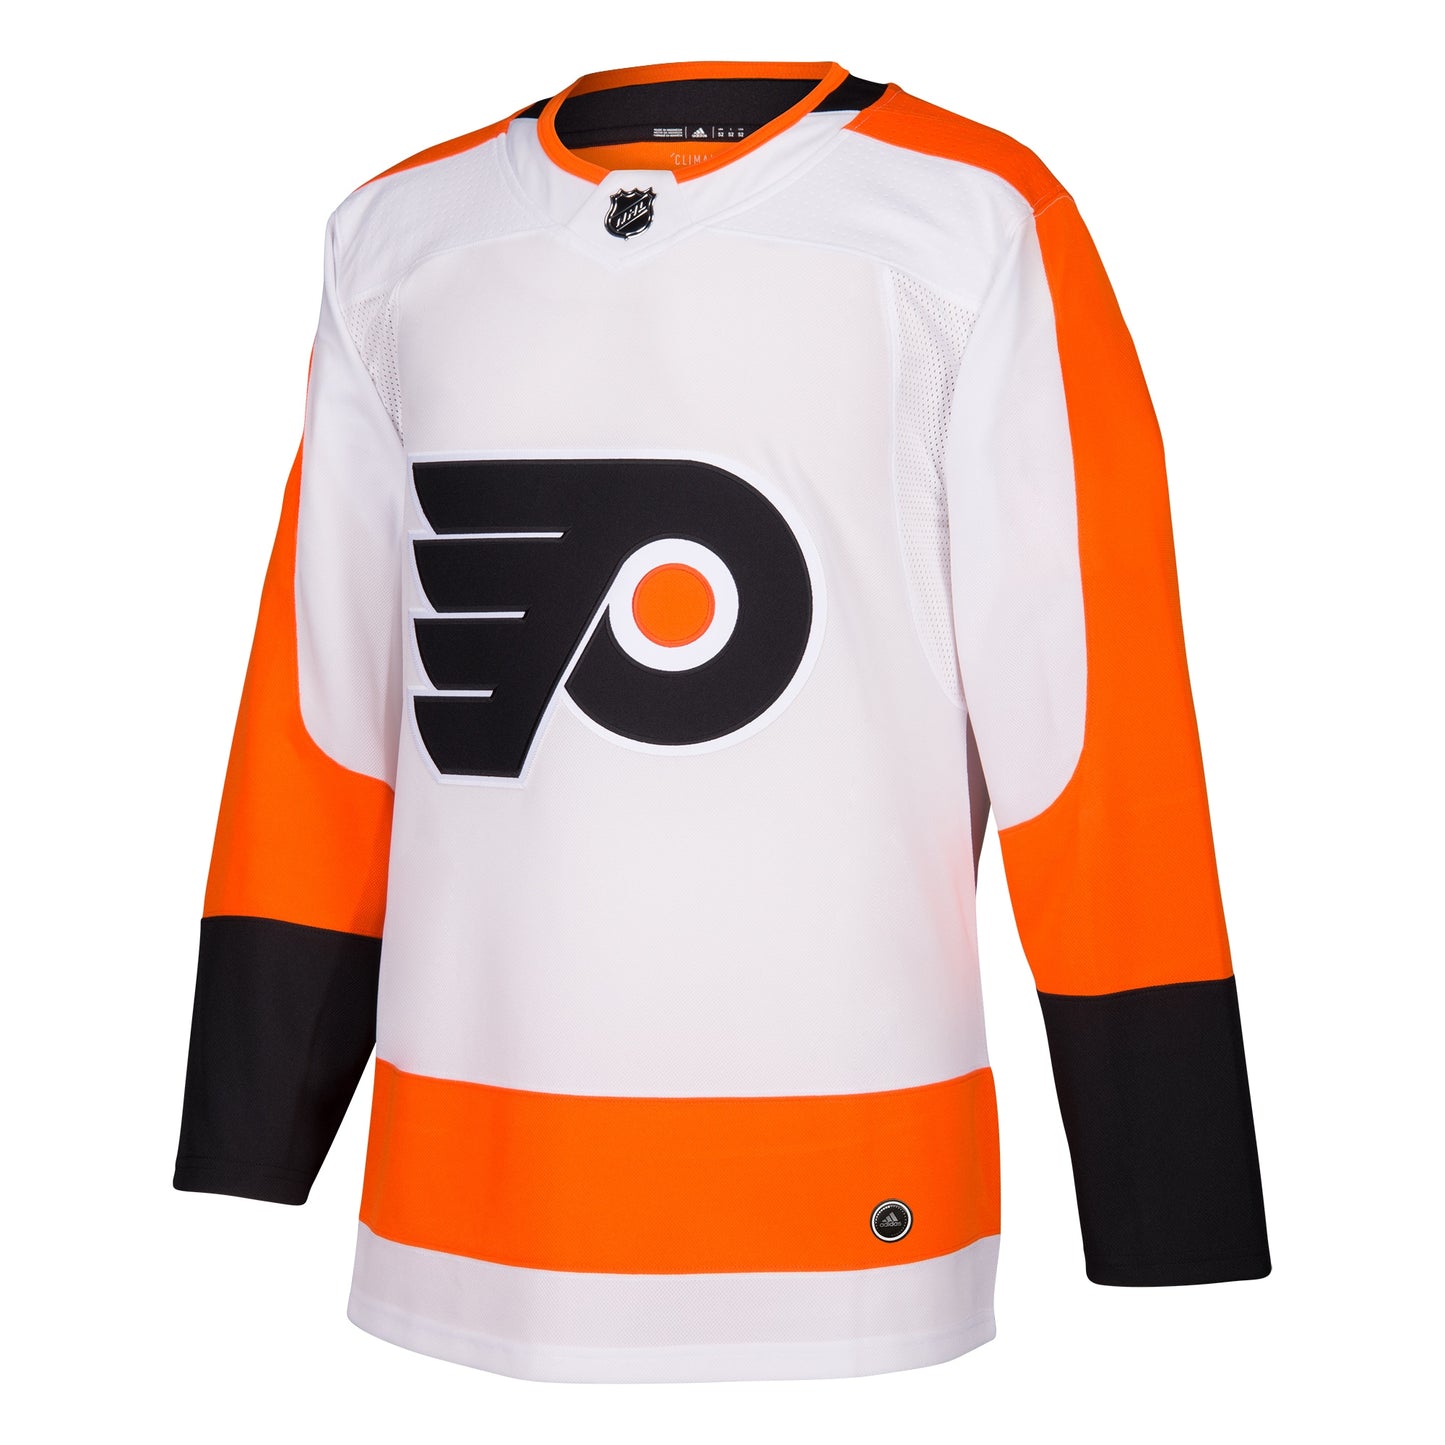 Philadelphia Flyers adidas Away Authentic Blank Jersey - White